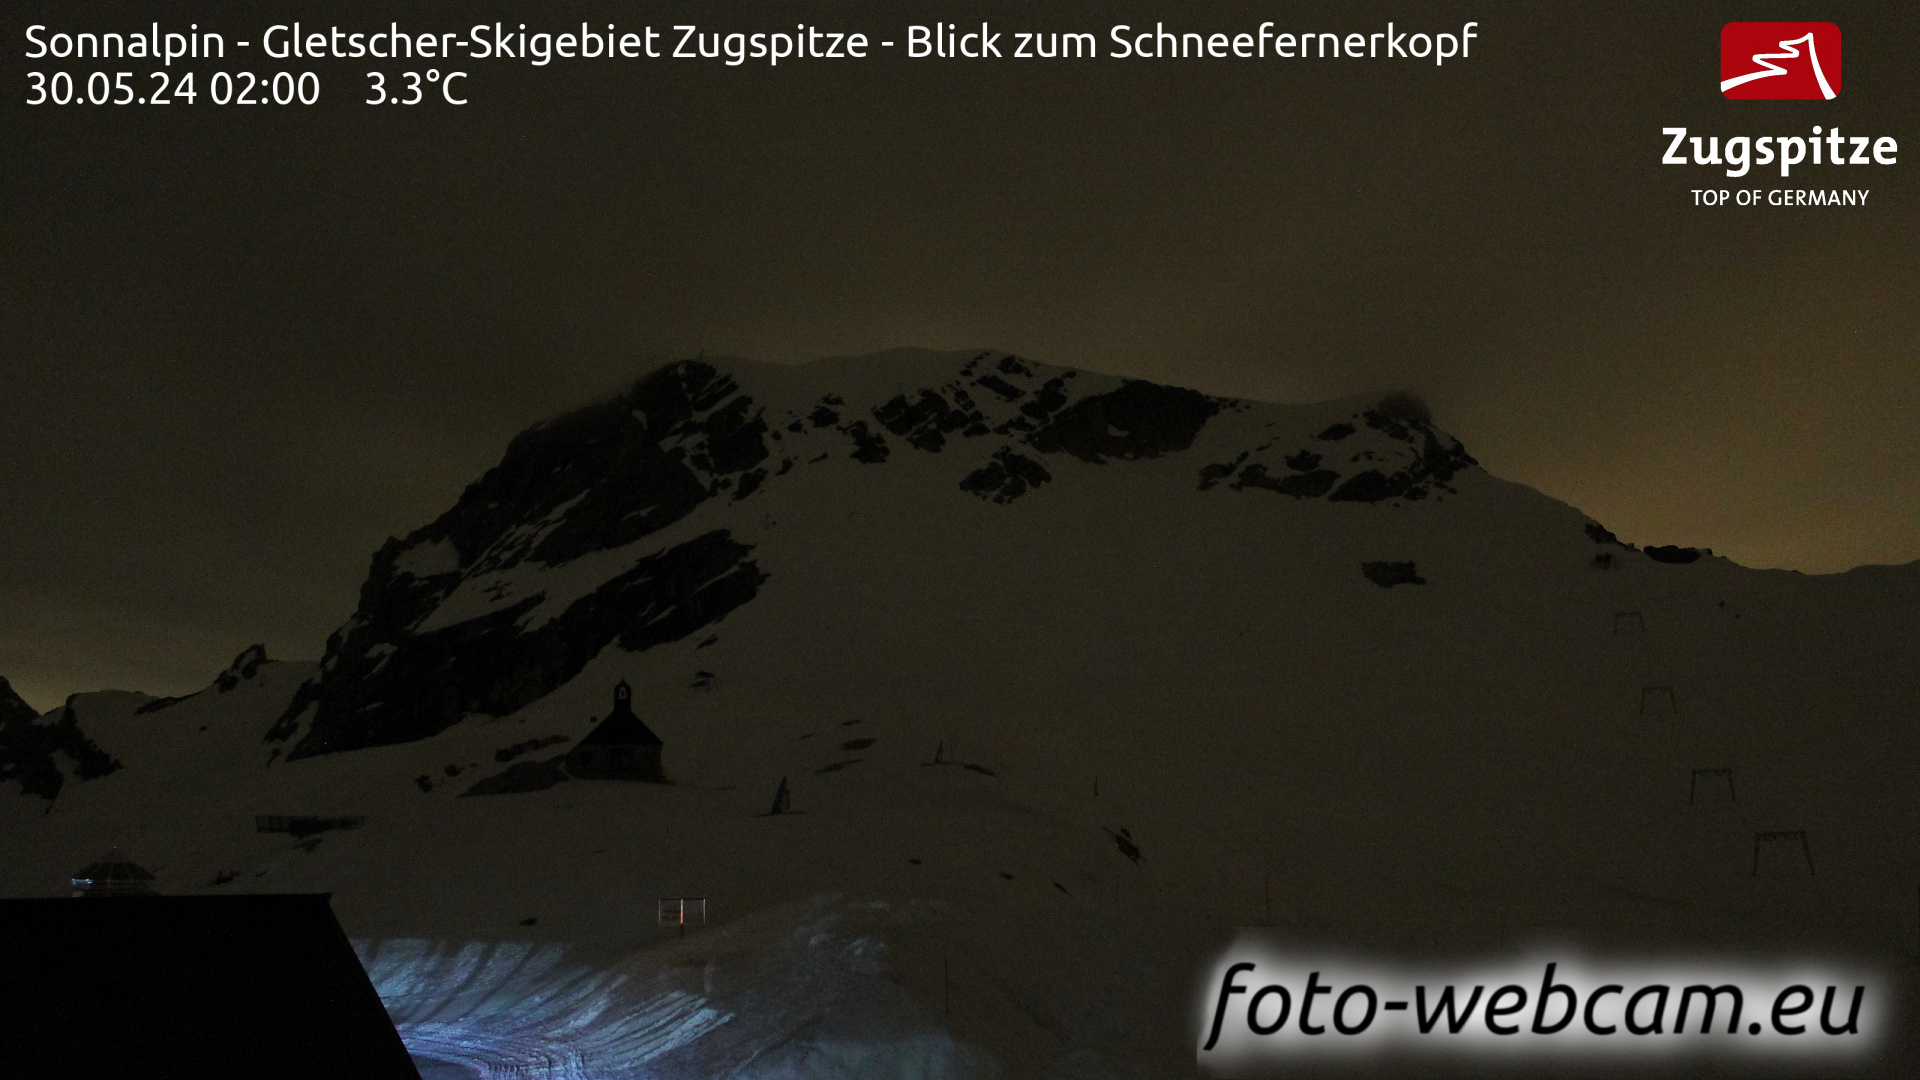 Zugspitze Mo. 02:24